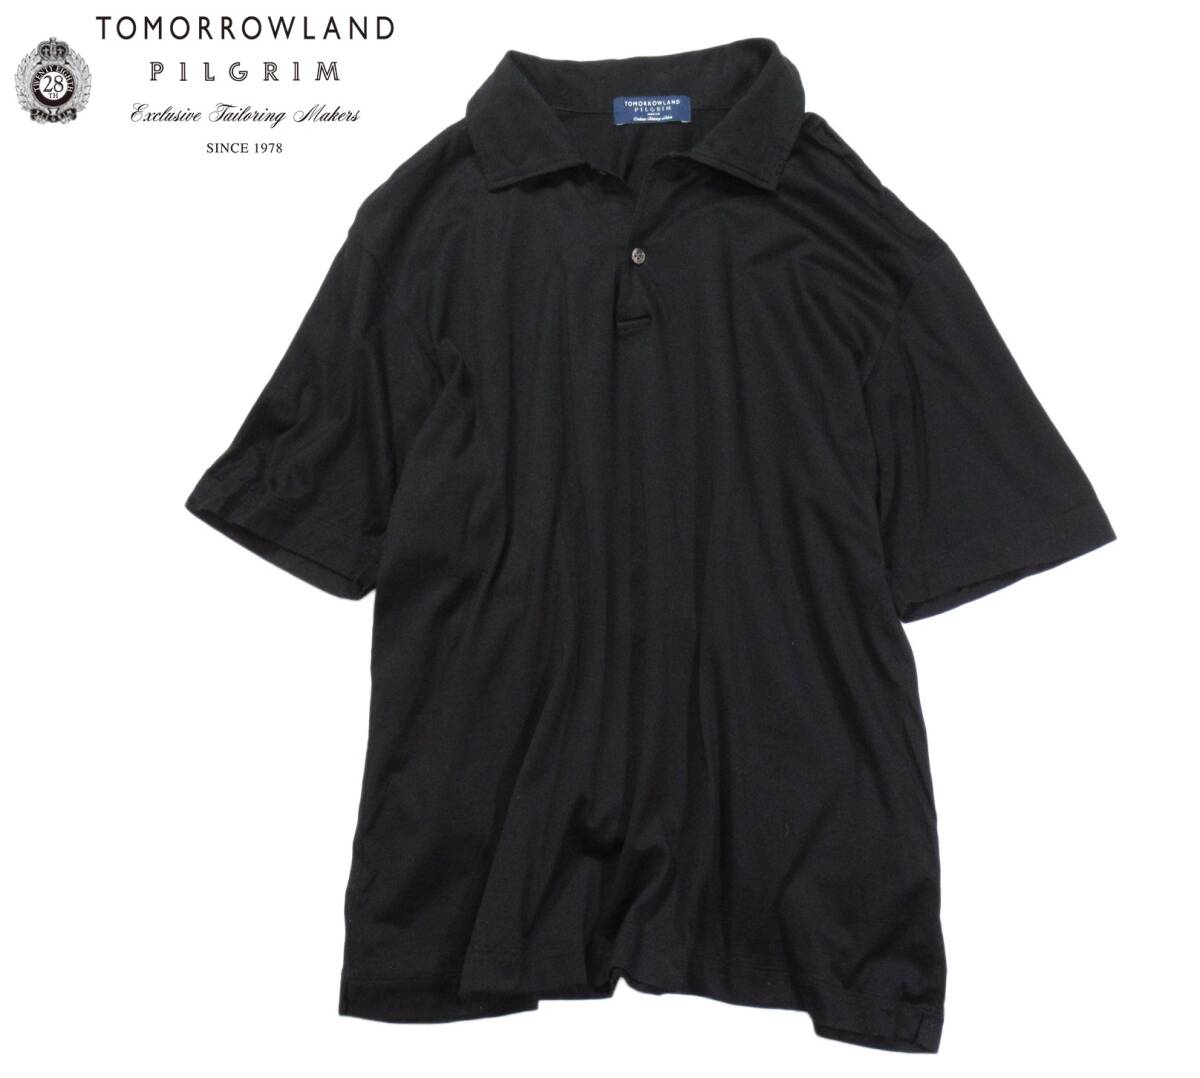  Tomorrowland piru Гримм TOMORROWLAND PILGRIM прекрасное качество хлопок рубашка M